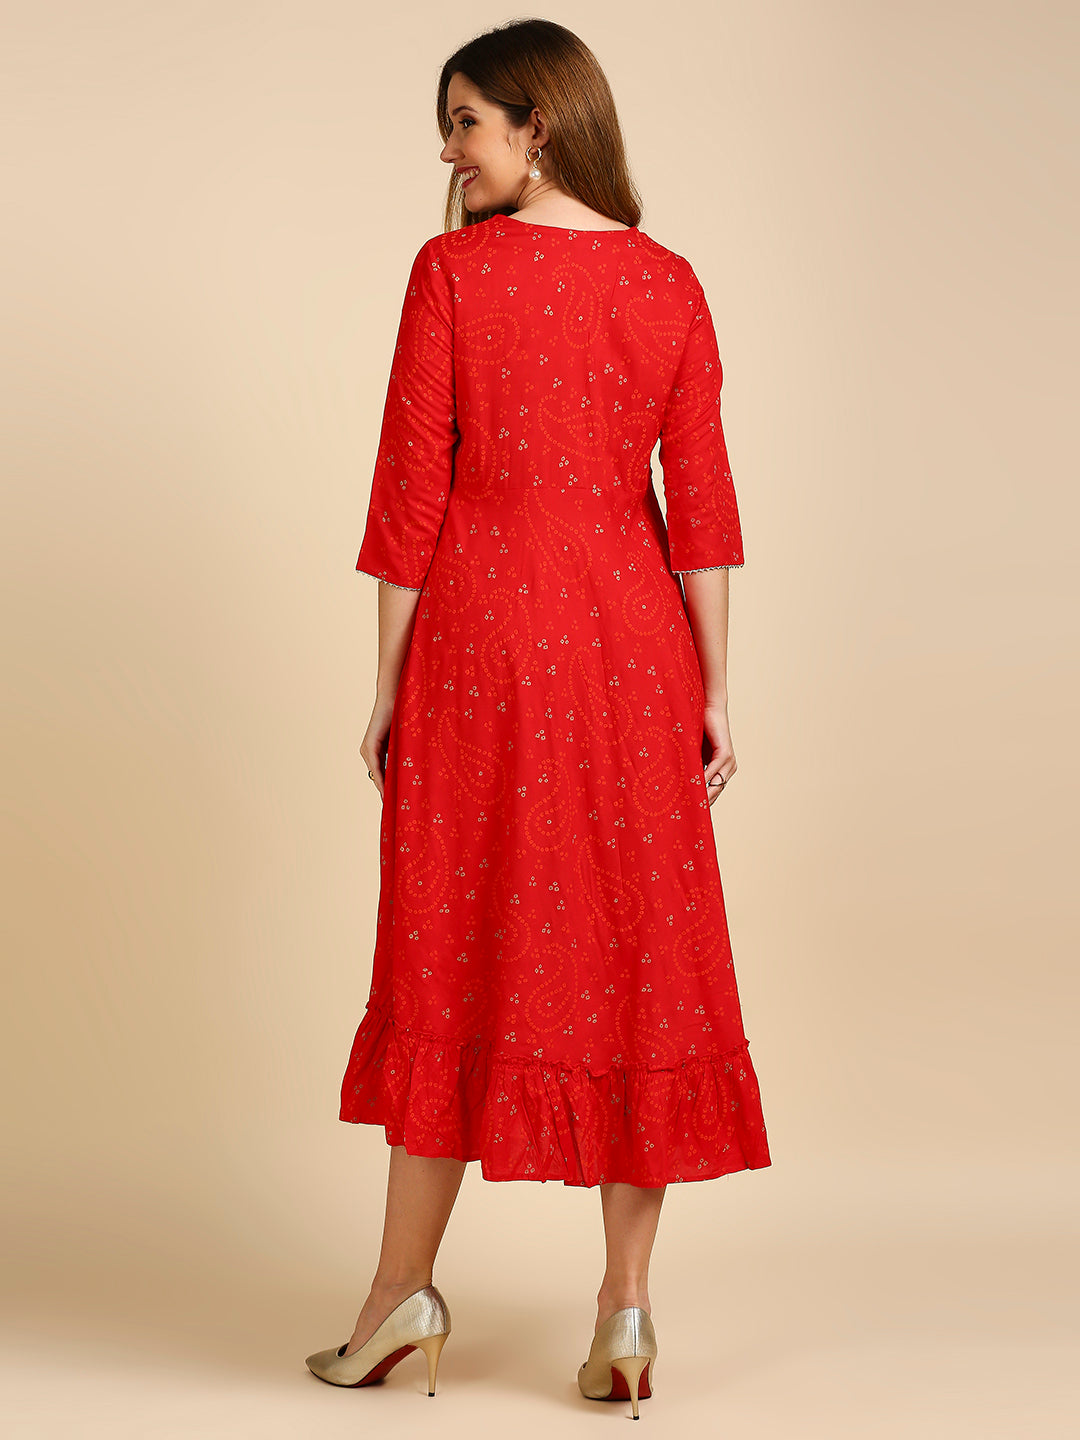 Women's's Red Ethnic Motifs Liva A-Line Midi Dress